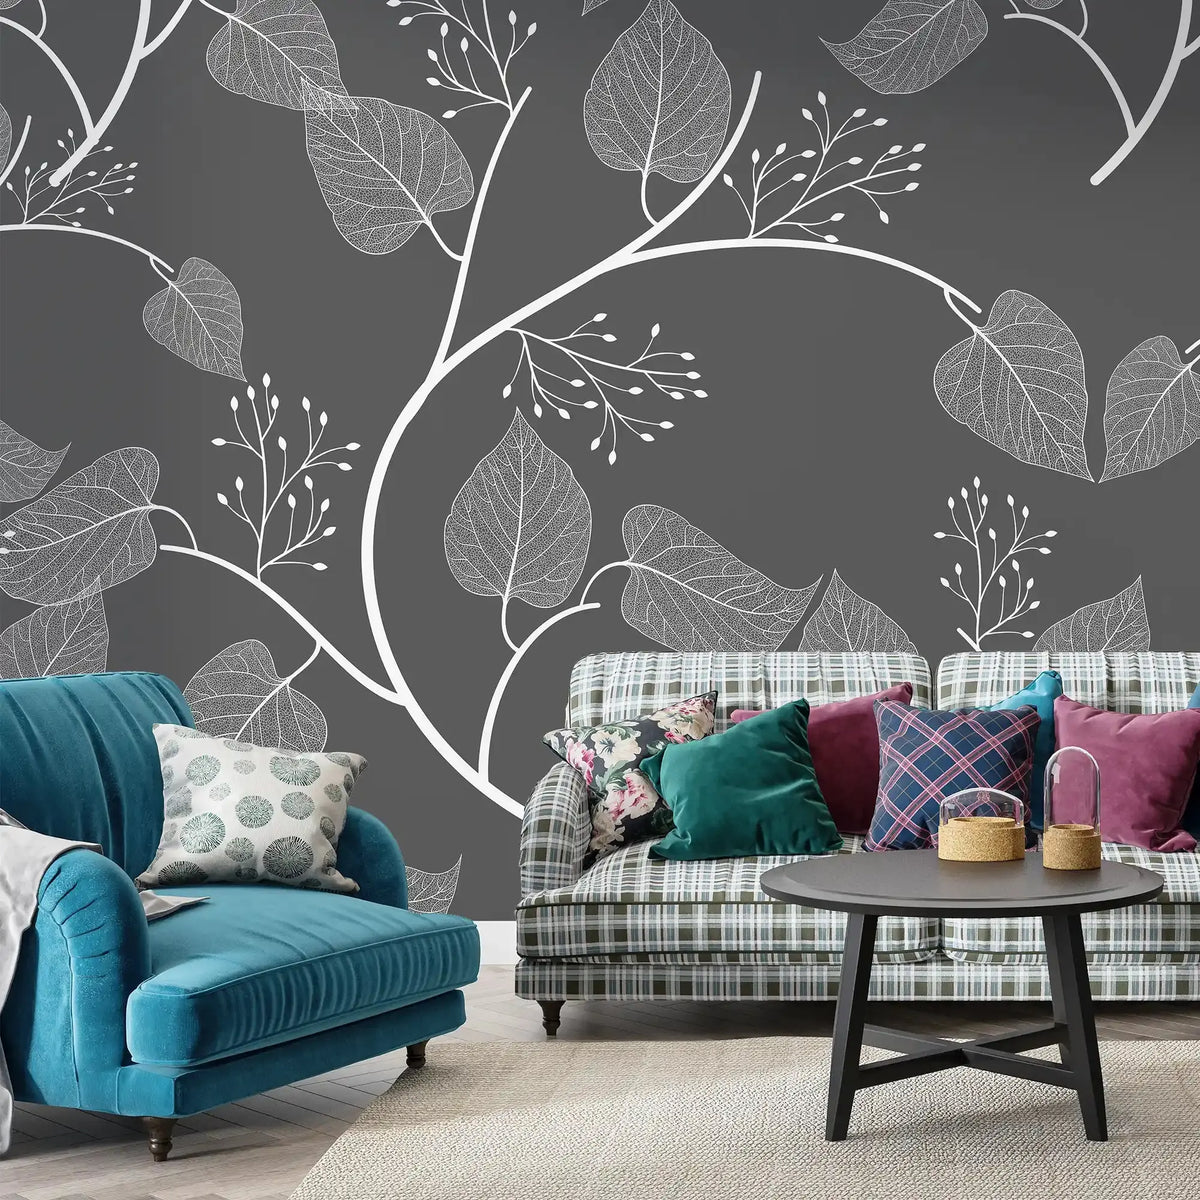 3104-A / Floral Peel and Stick Wallpaper, Botanical Leaf Design Wall Mural - Artevella